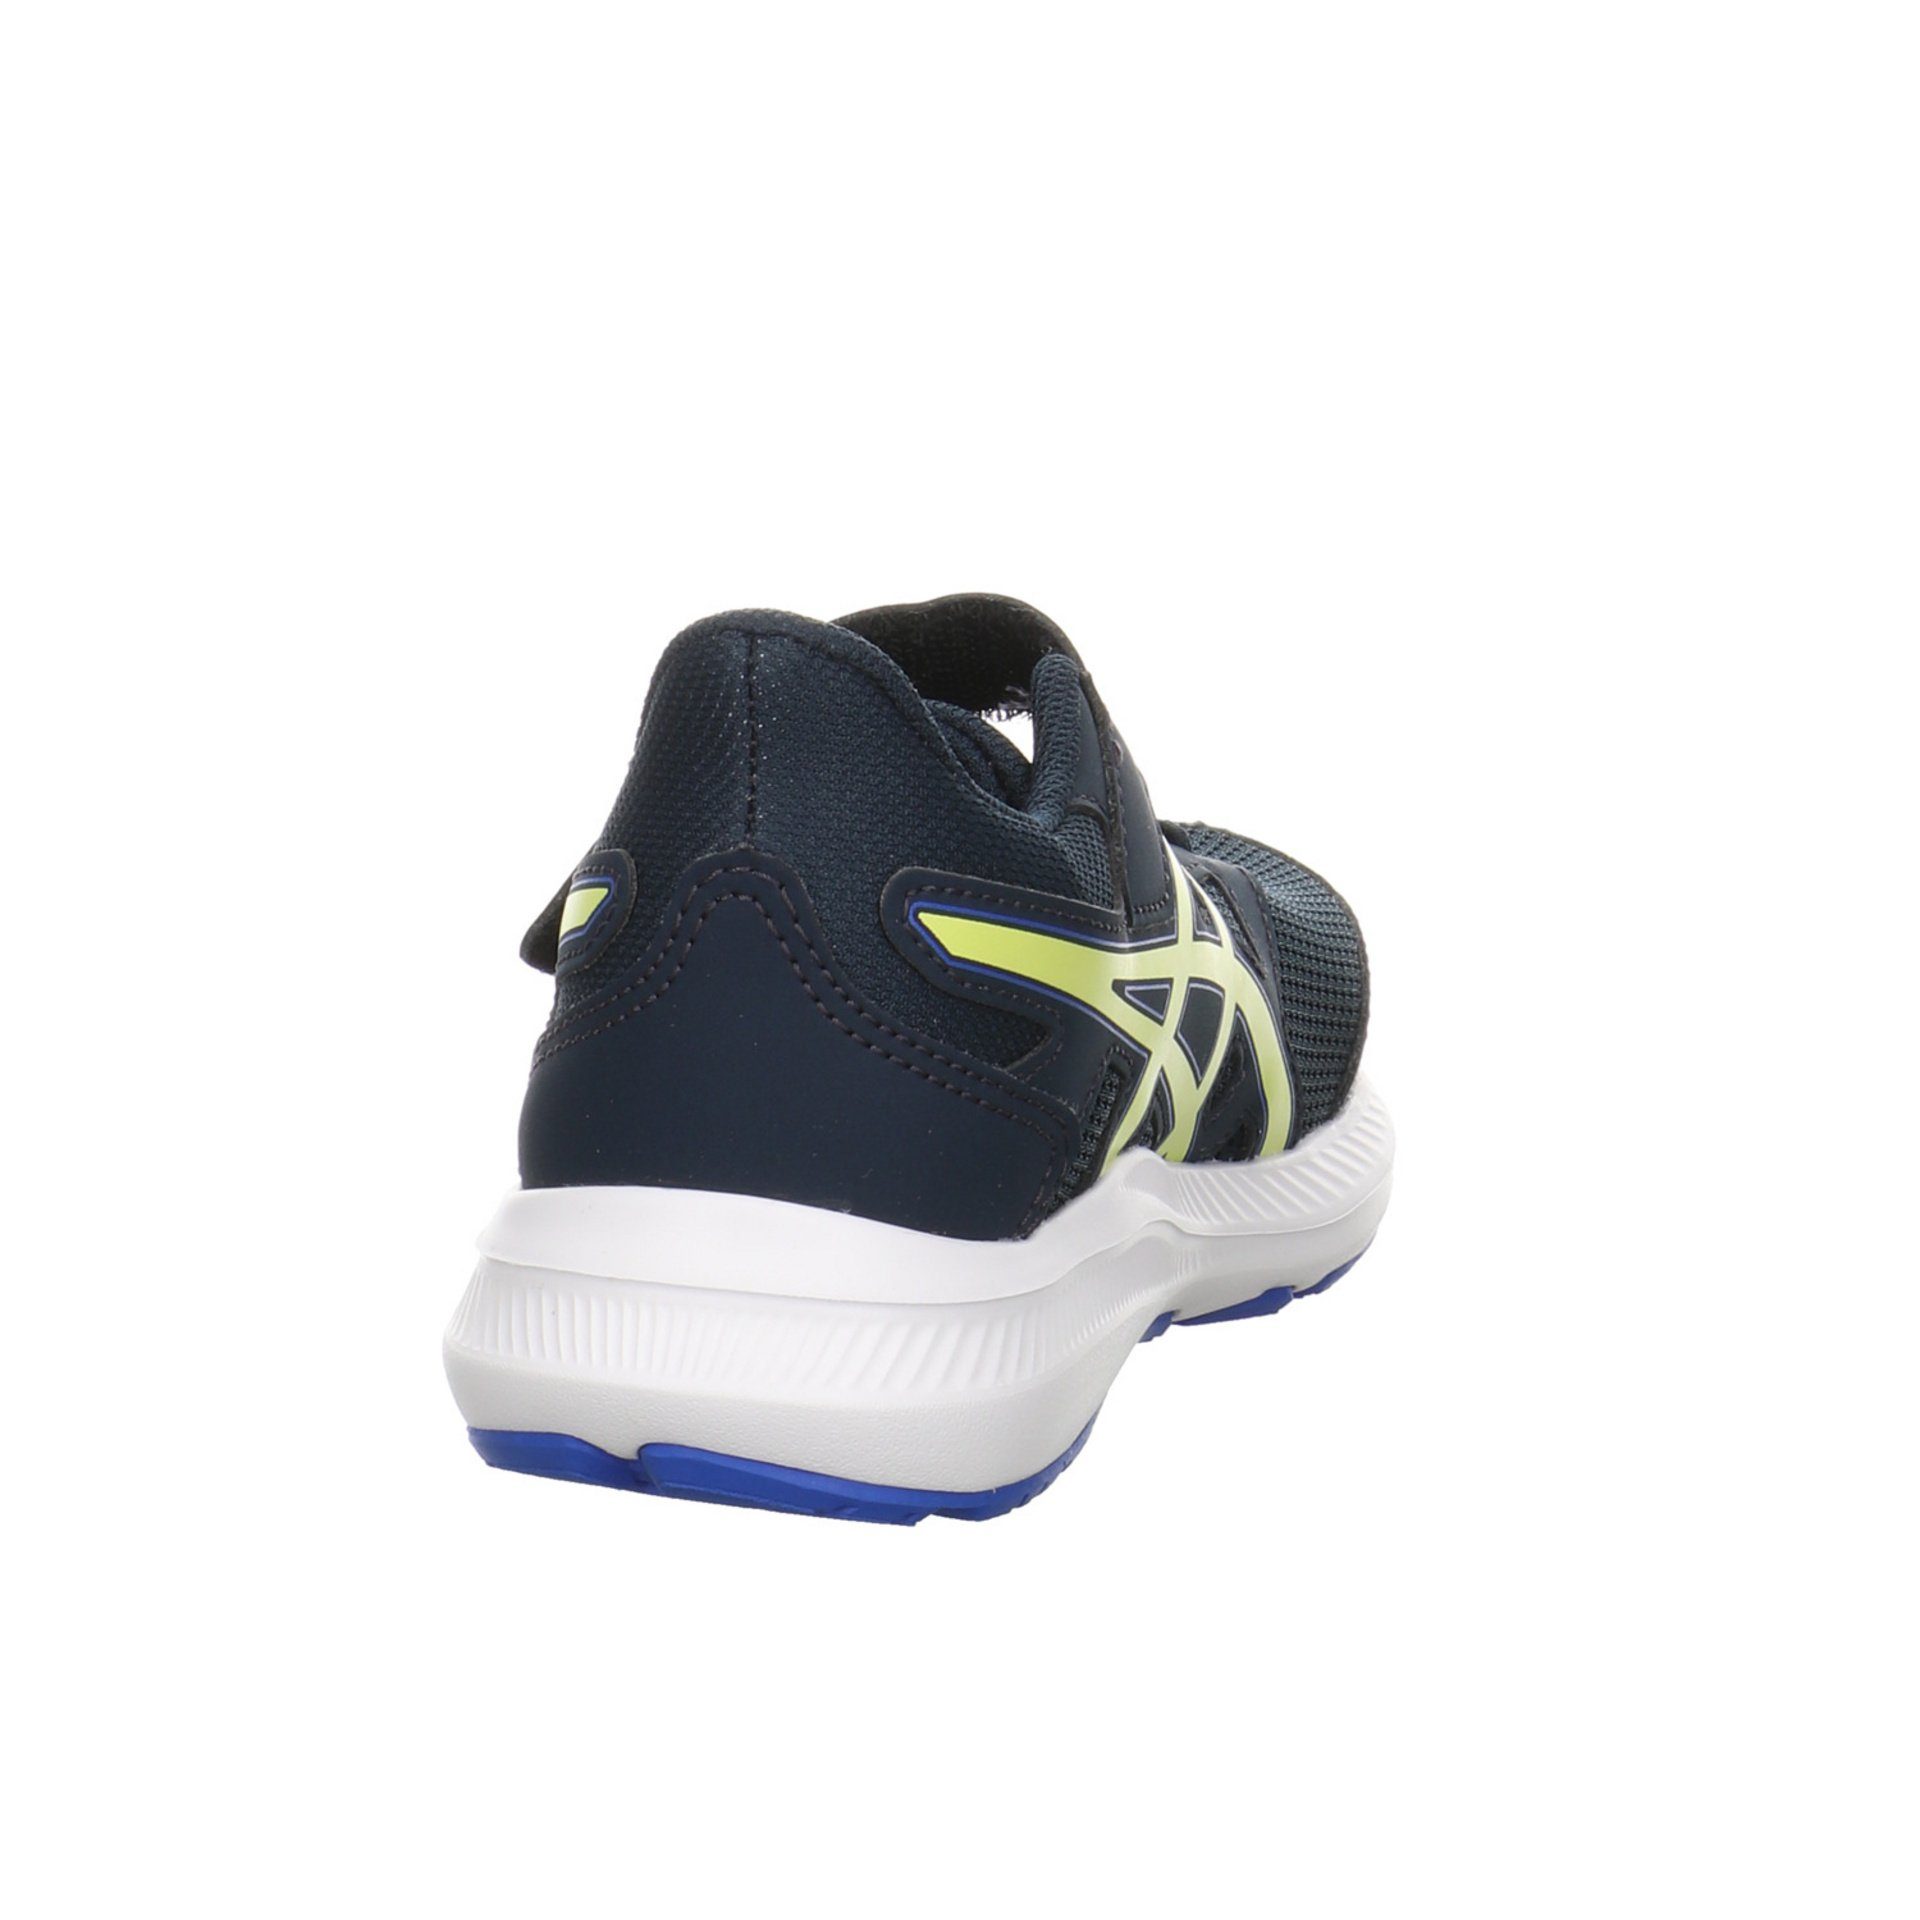 FRENCH YEL PS 4 Sneaker Sneaker Schuhe Synthetikkombination Sportschuh BLUE/GLOW Asics Jolt Mädchen